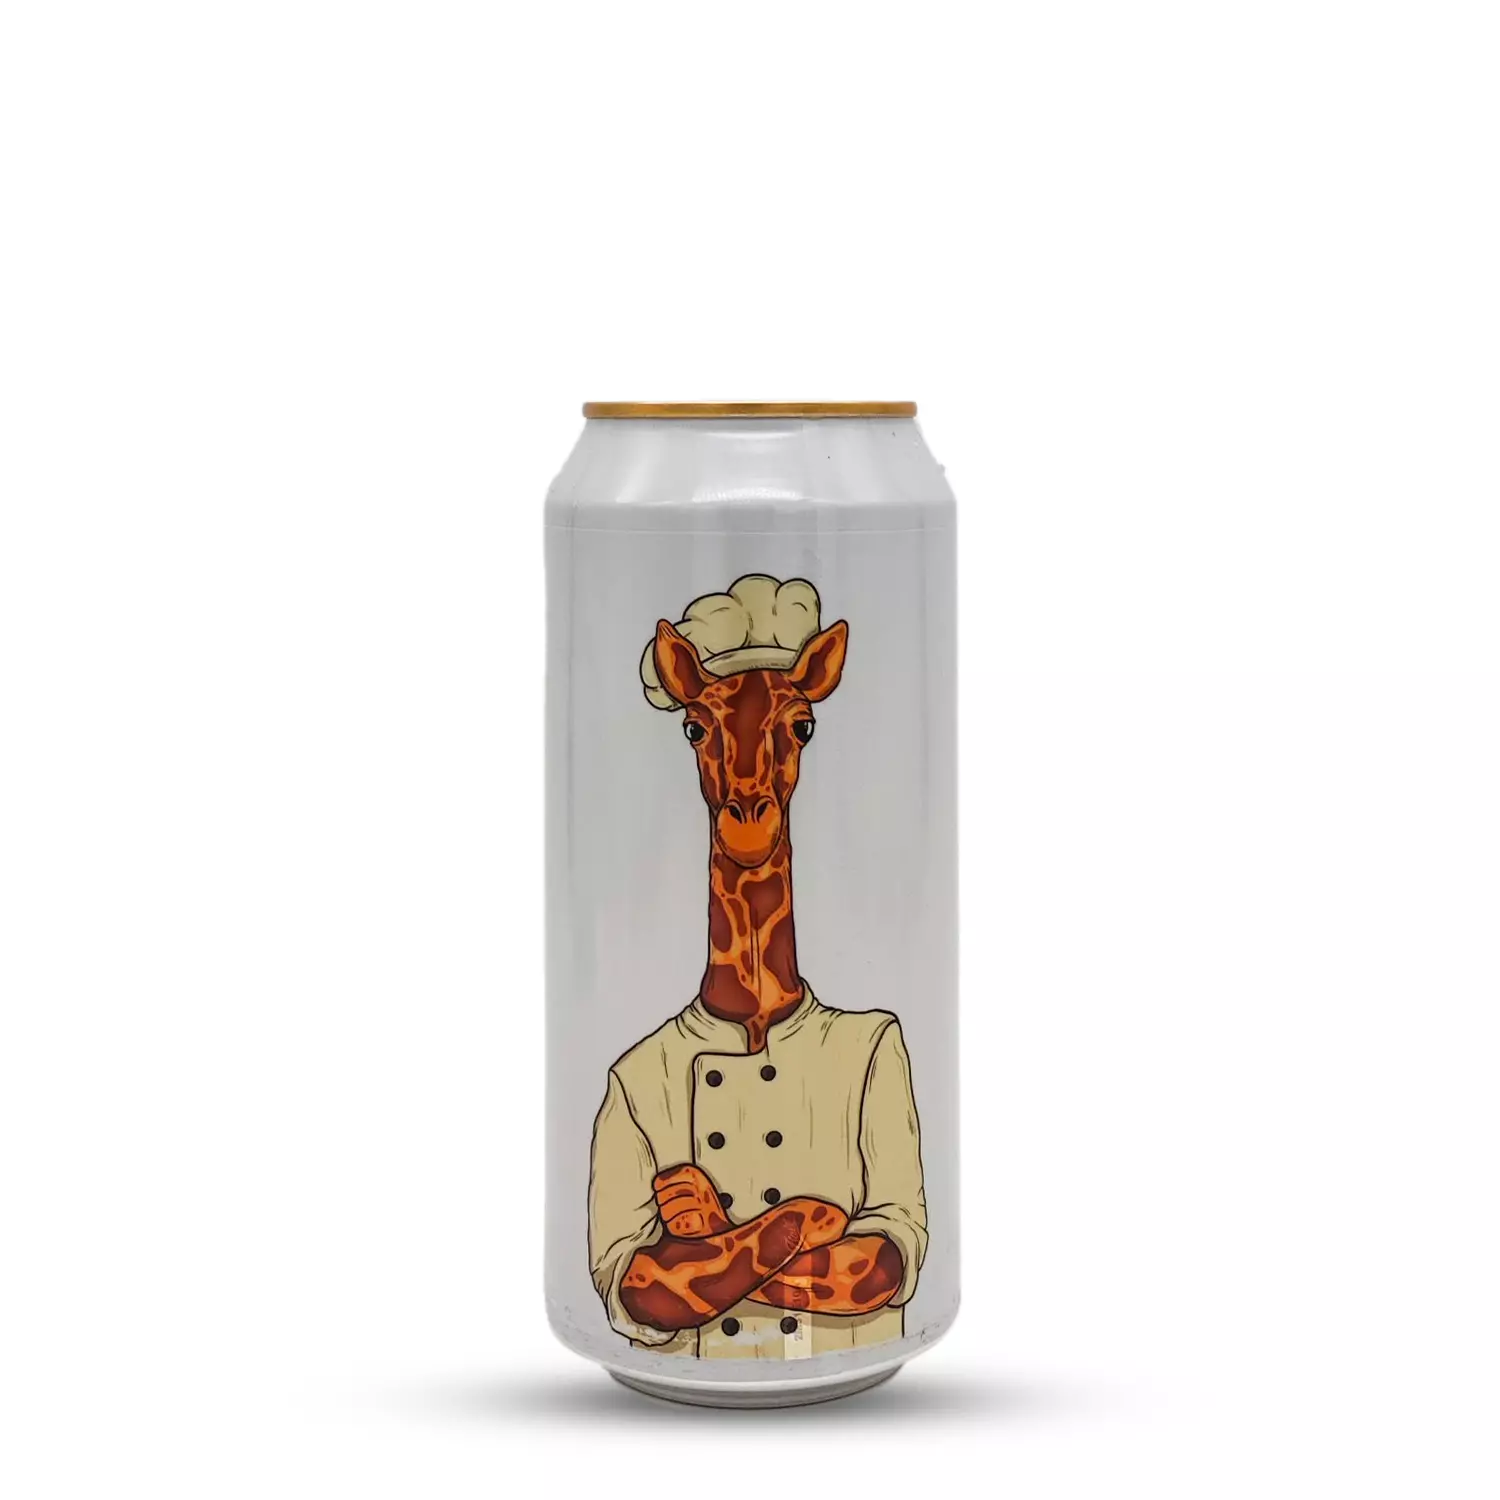 The Giraffe | Fermenterarna (SWE) | 0,44L - 6%